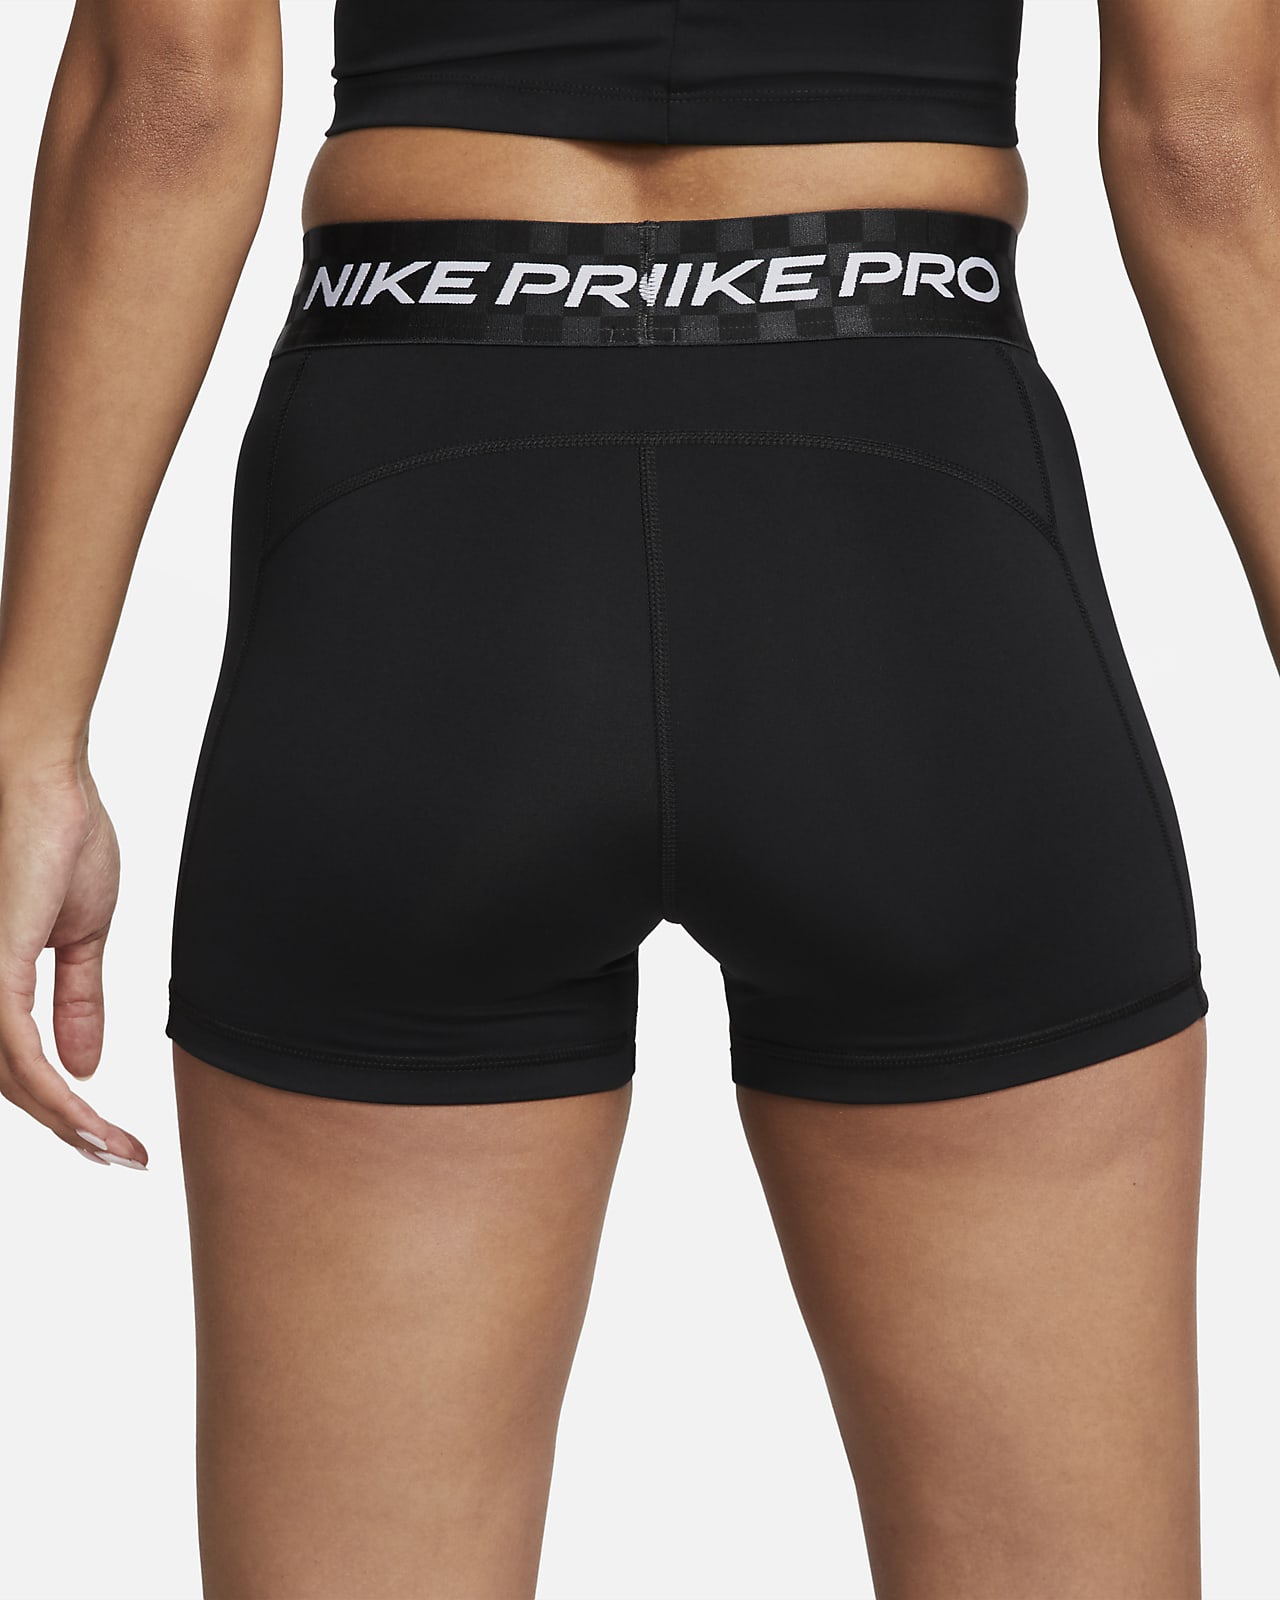 NIKE Bike Shorts for Workouts